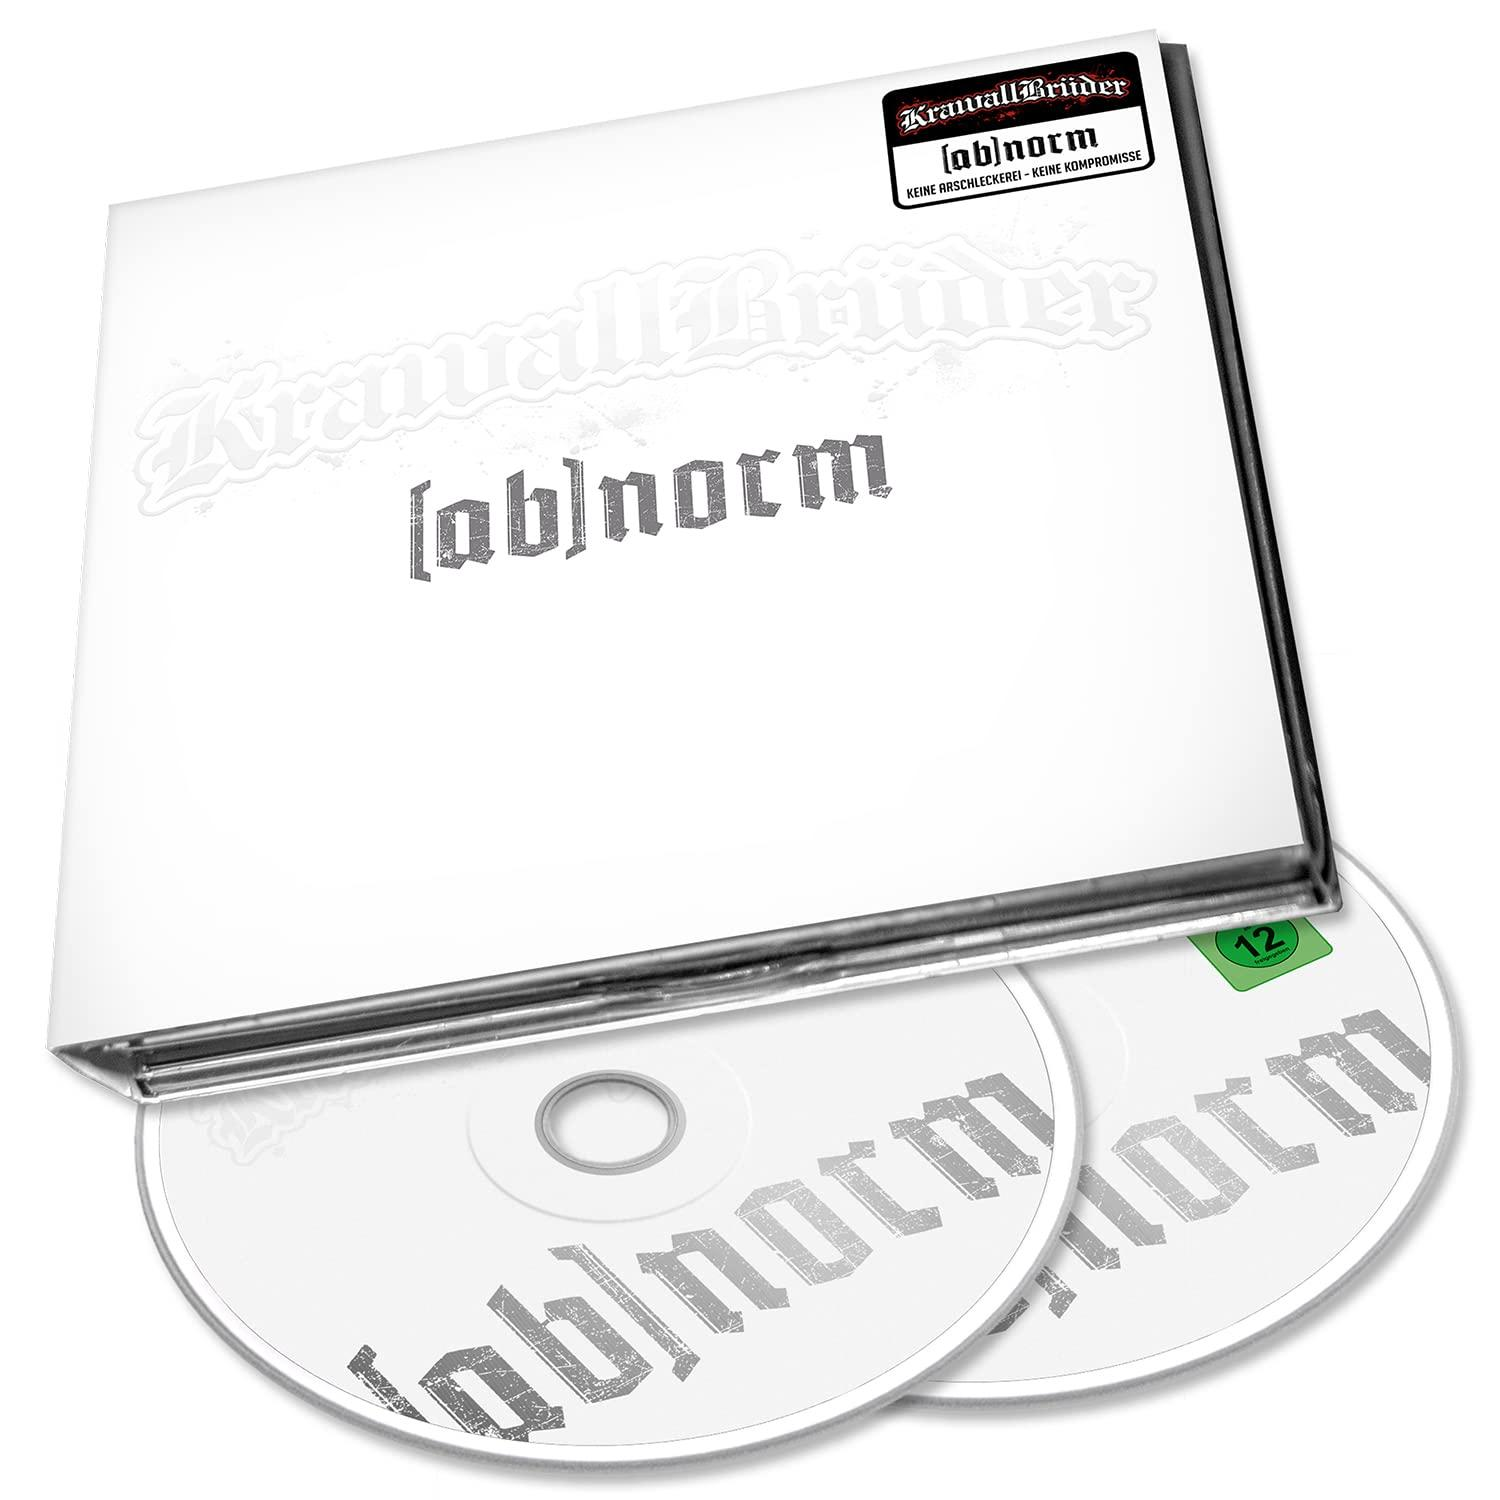 Krawallbrüder - [AB]NORM + DVD (CD (DIGI) Video) 